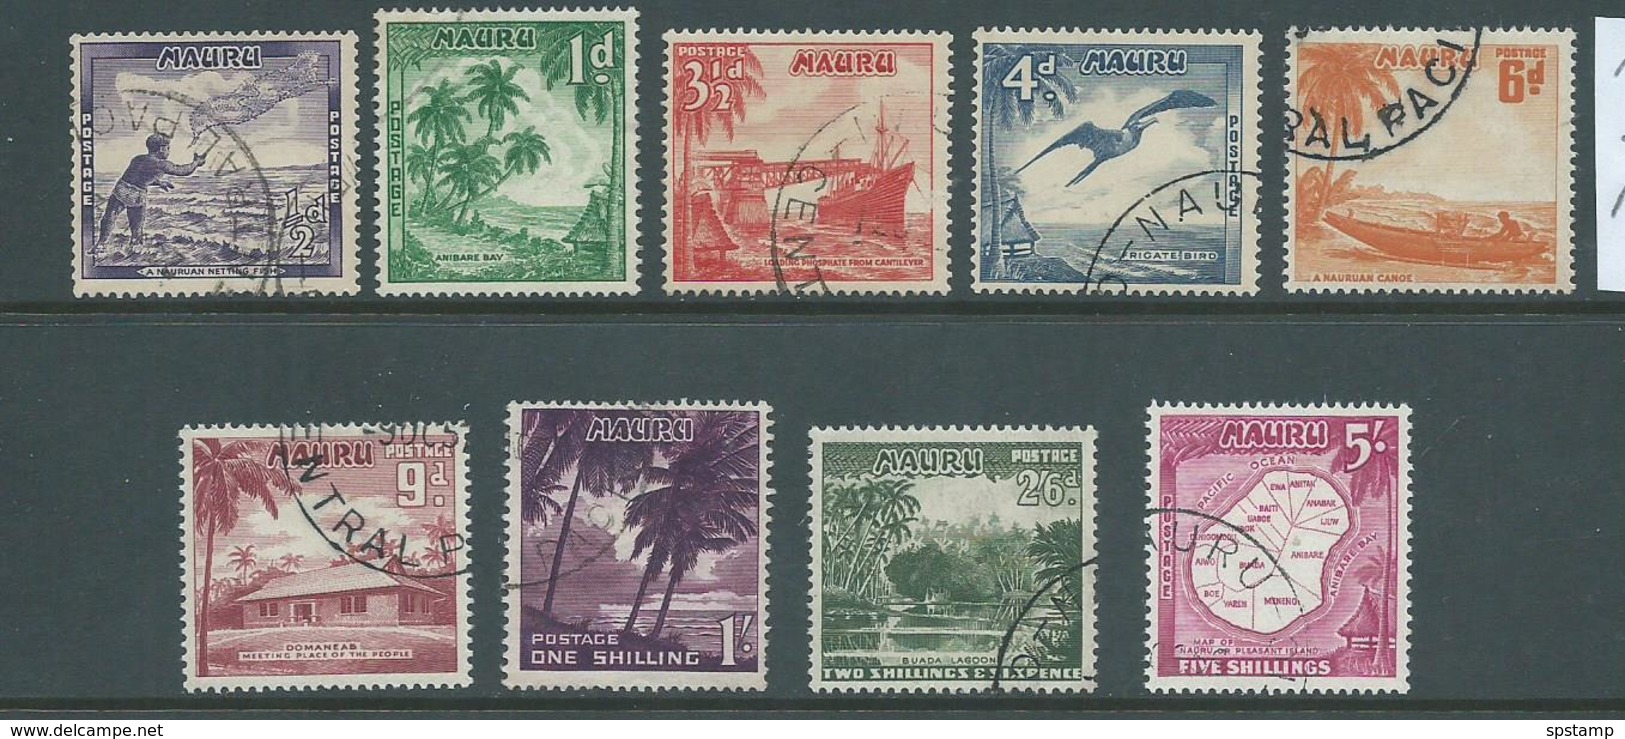 Nauru 1954 Definitive Set 9 VFU - Nauru